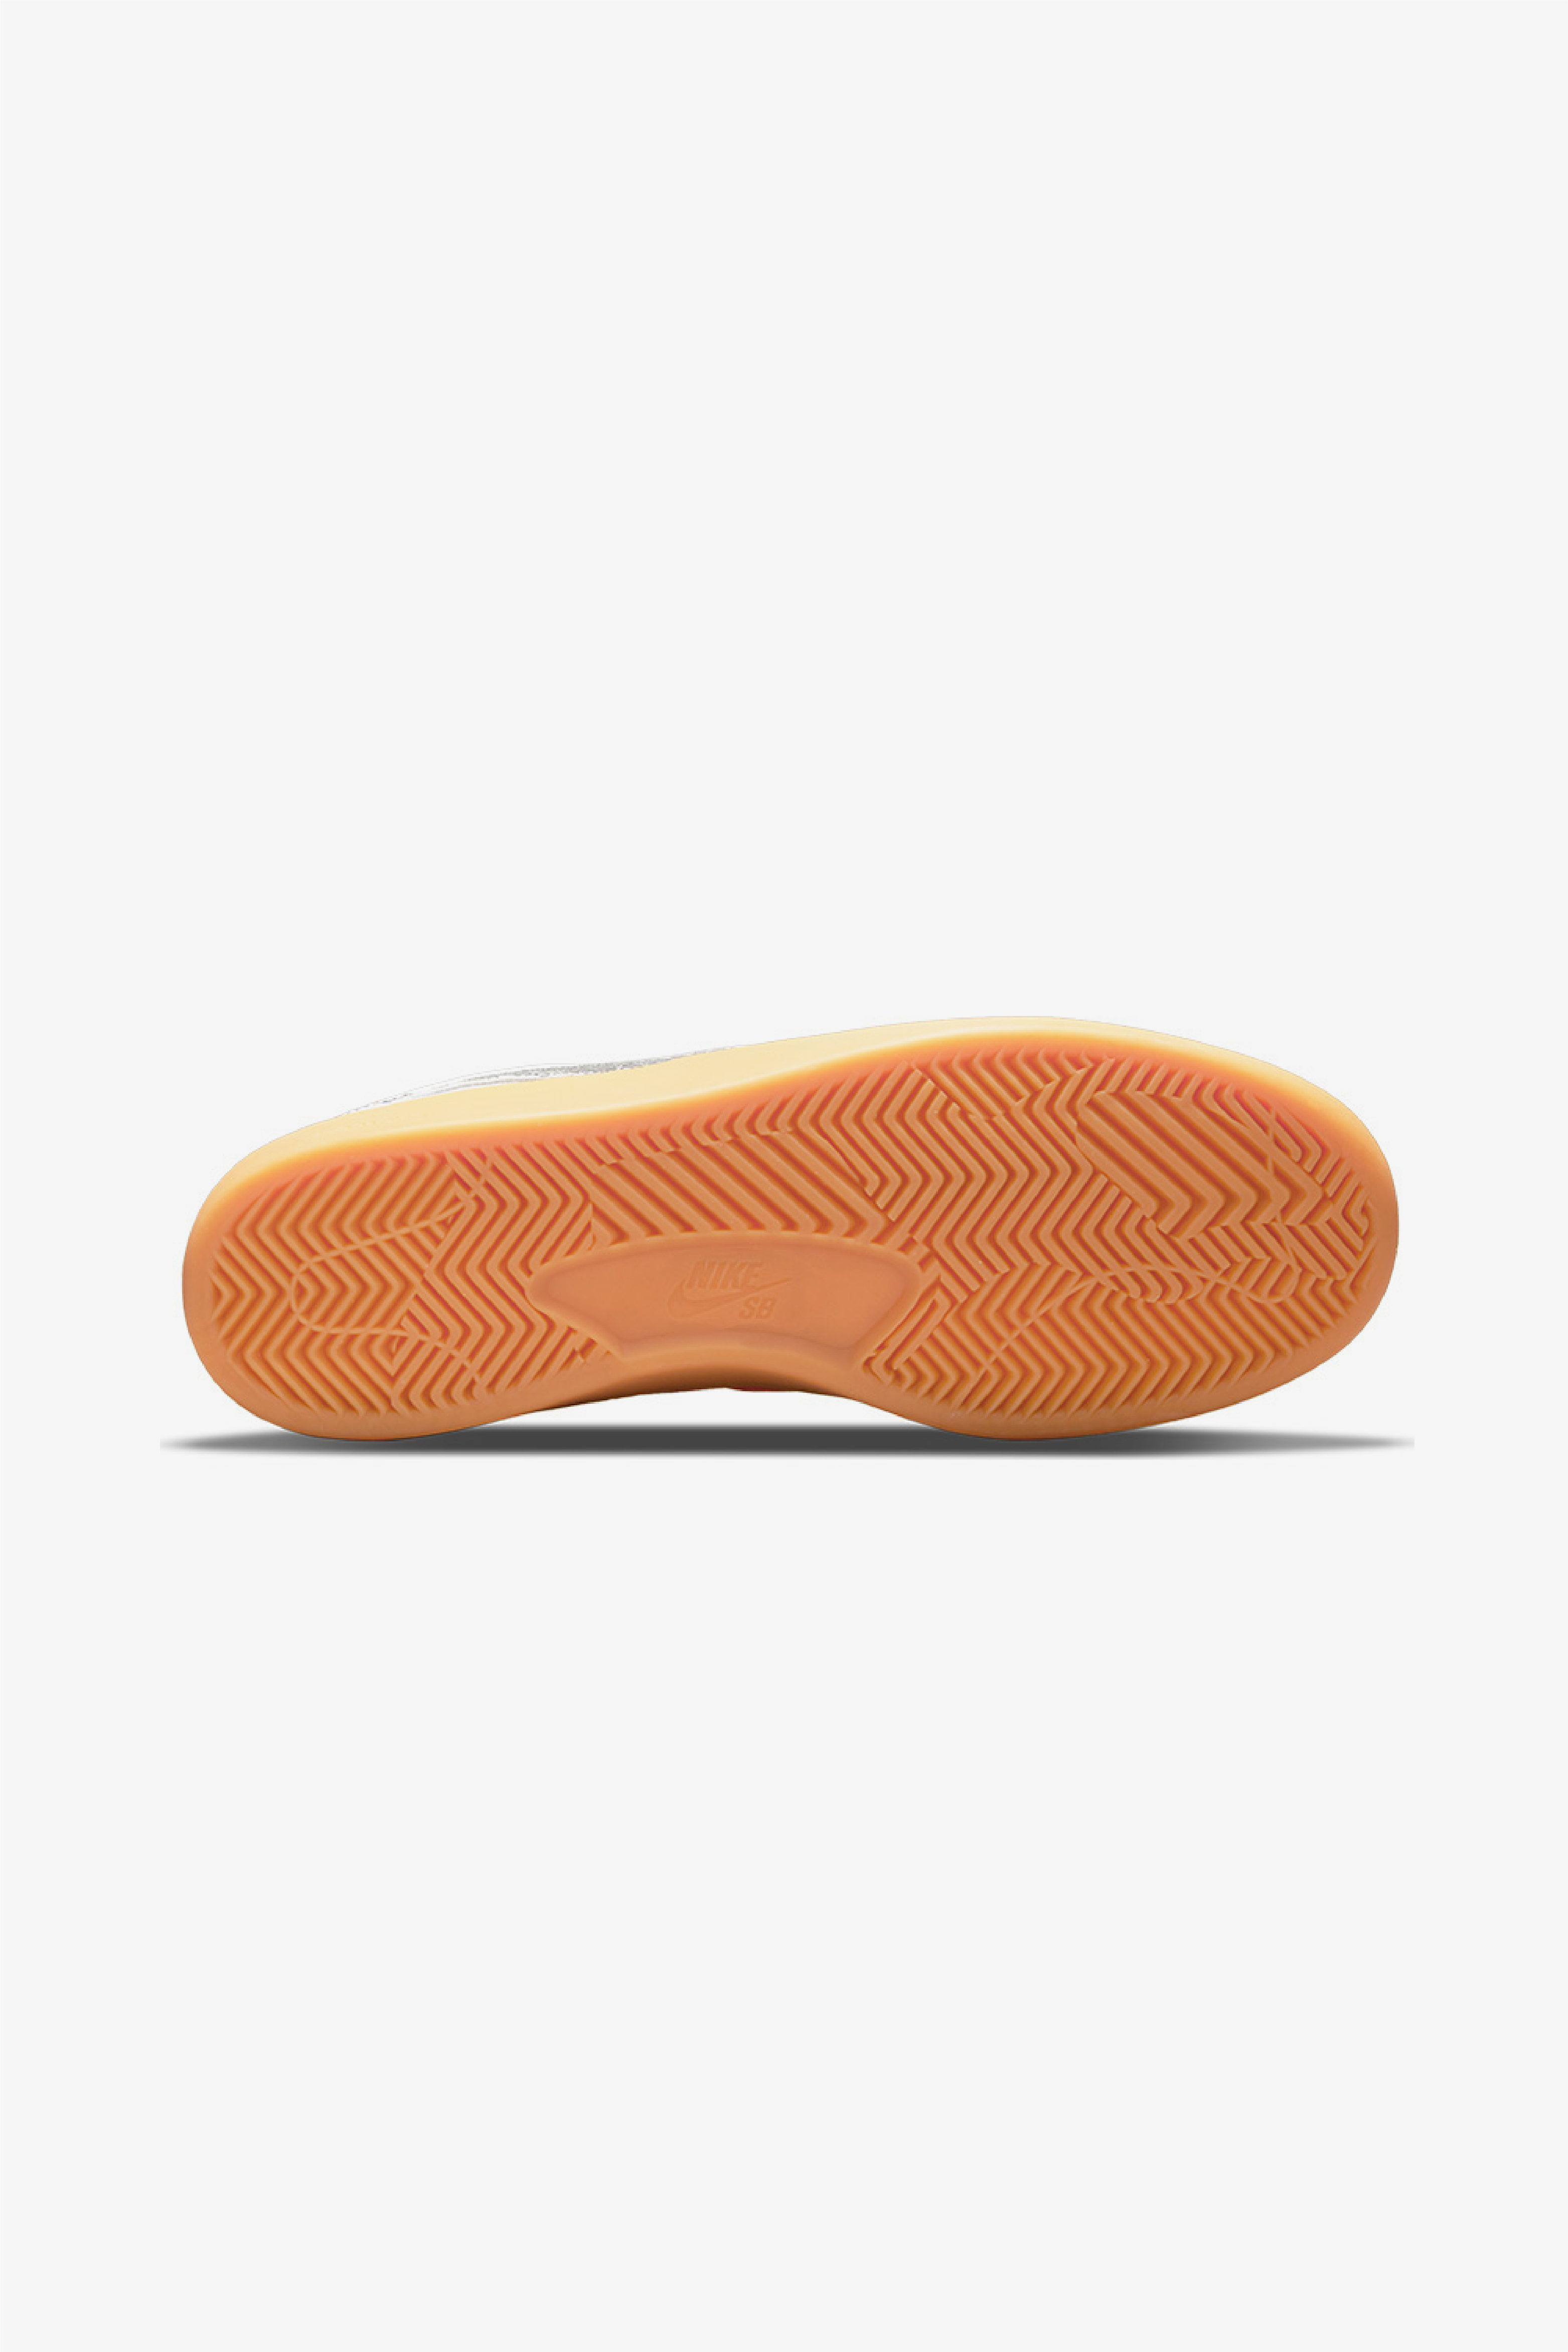 Selectshop FRAME - NIKE SB Nike SB Bruin React “White Summit" Footwear Dubai